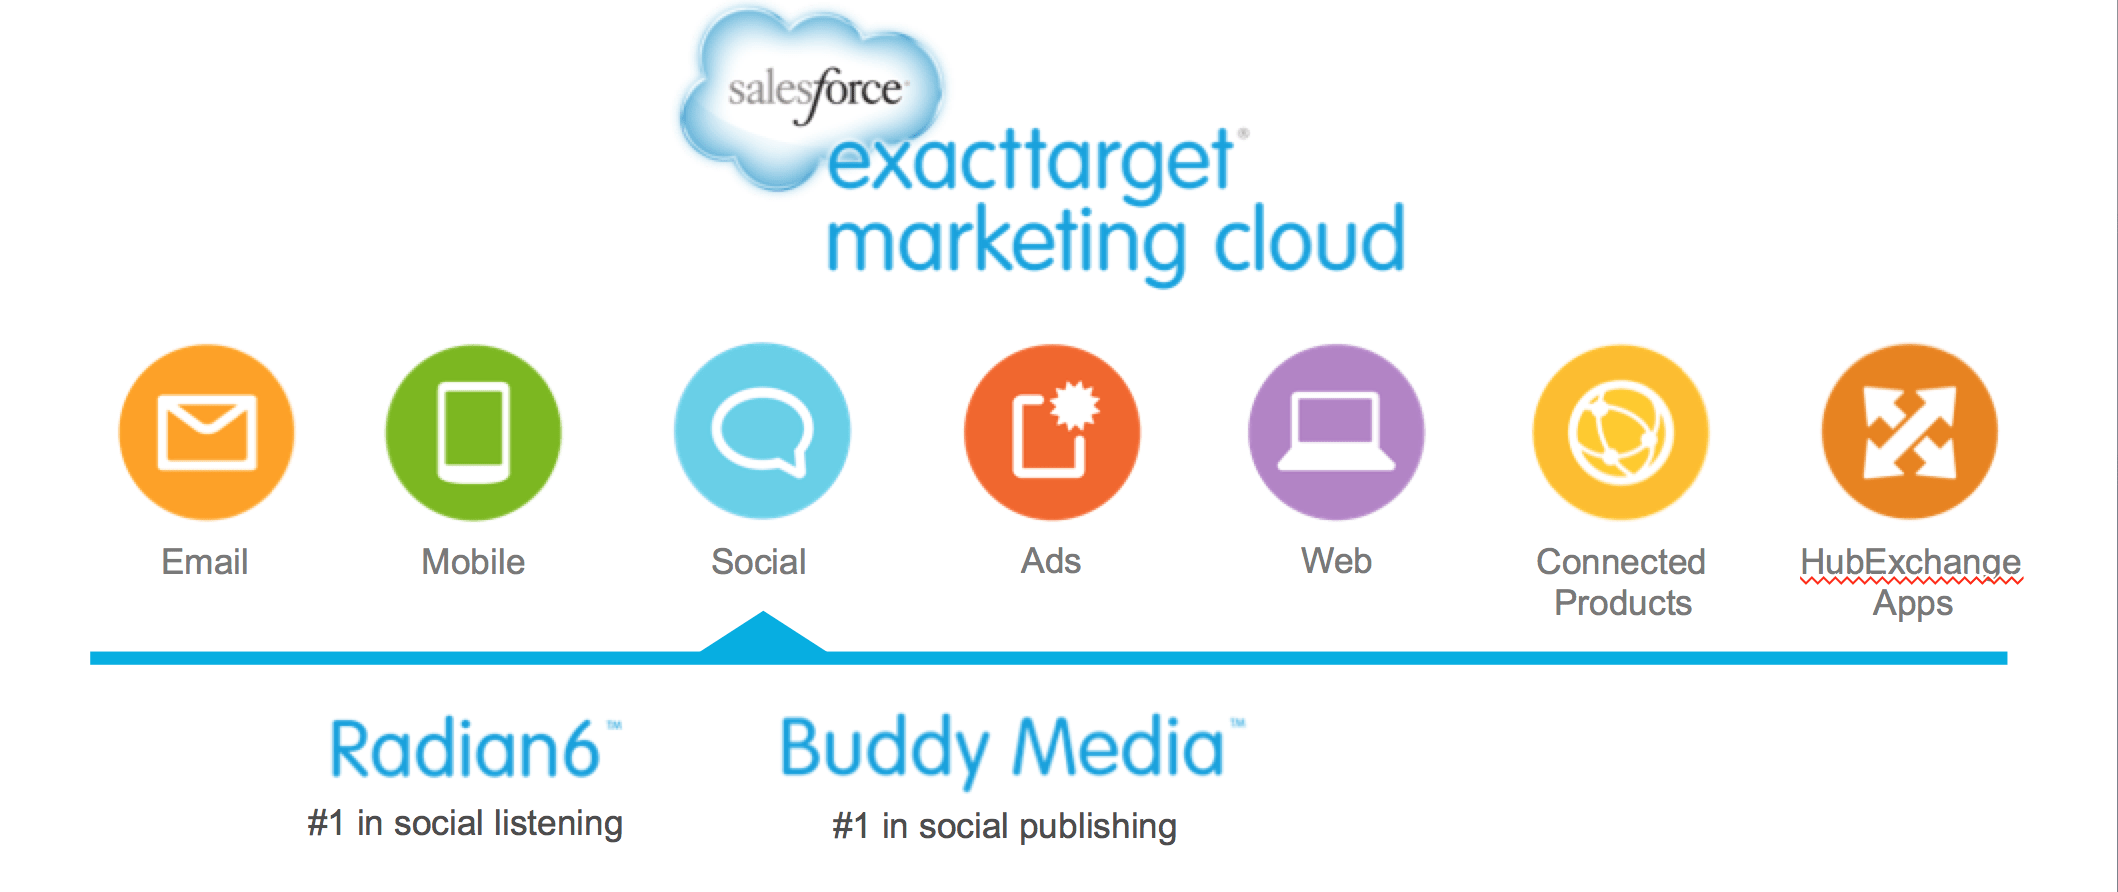 Salesforce Marketing Cloud Logo - Salesforce's ExactTarget Marketing Cloud combines Radian6 and Buddy